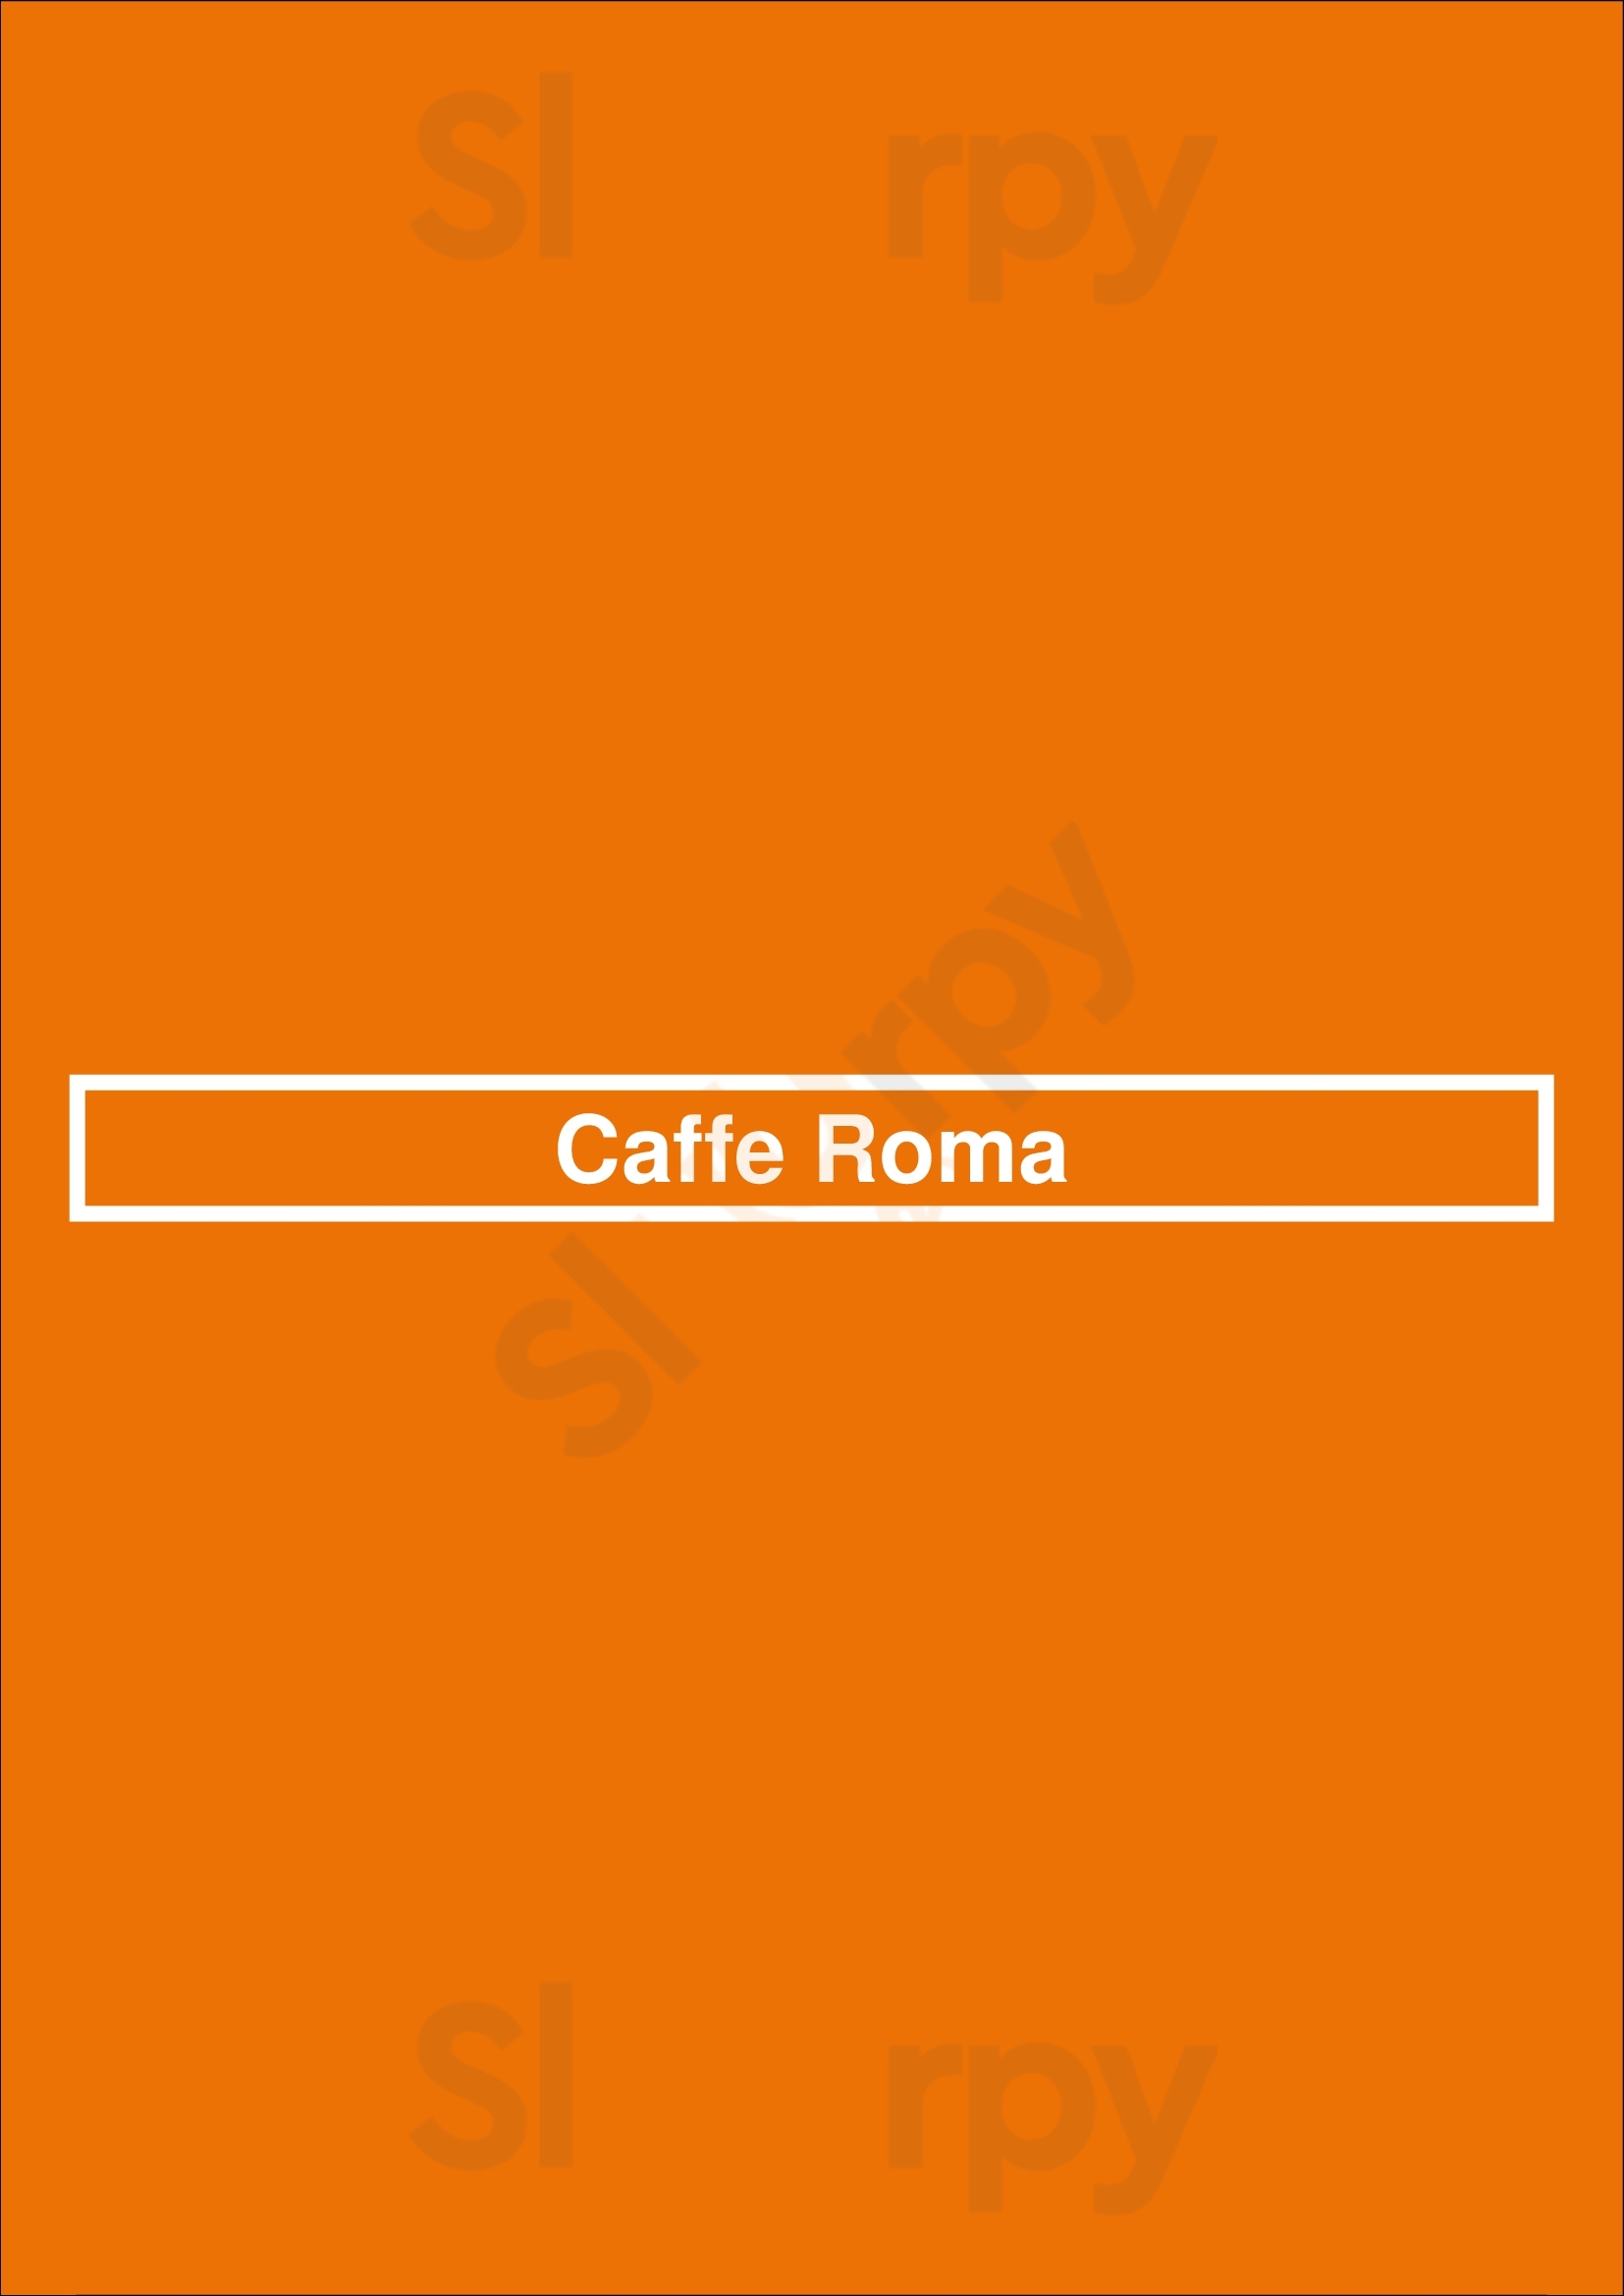 Caffe Roma San Francisco Menu - 1